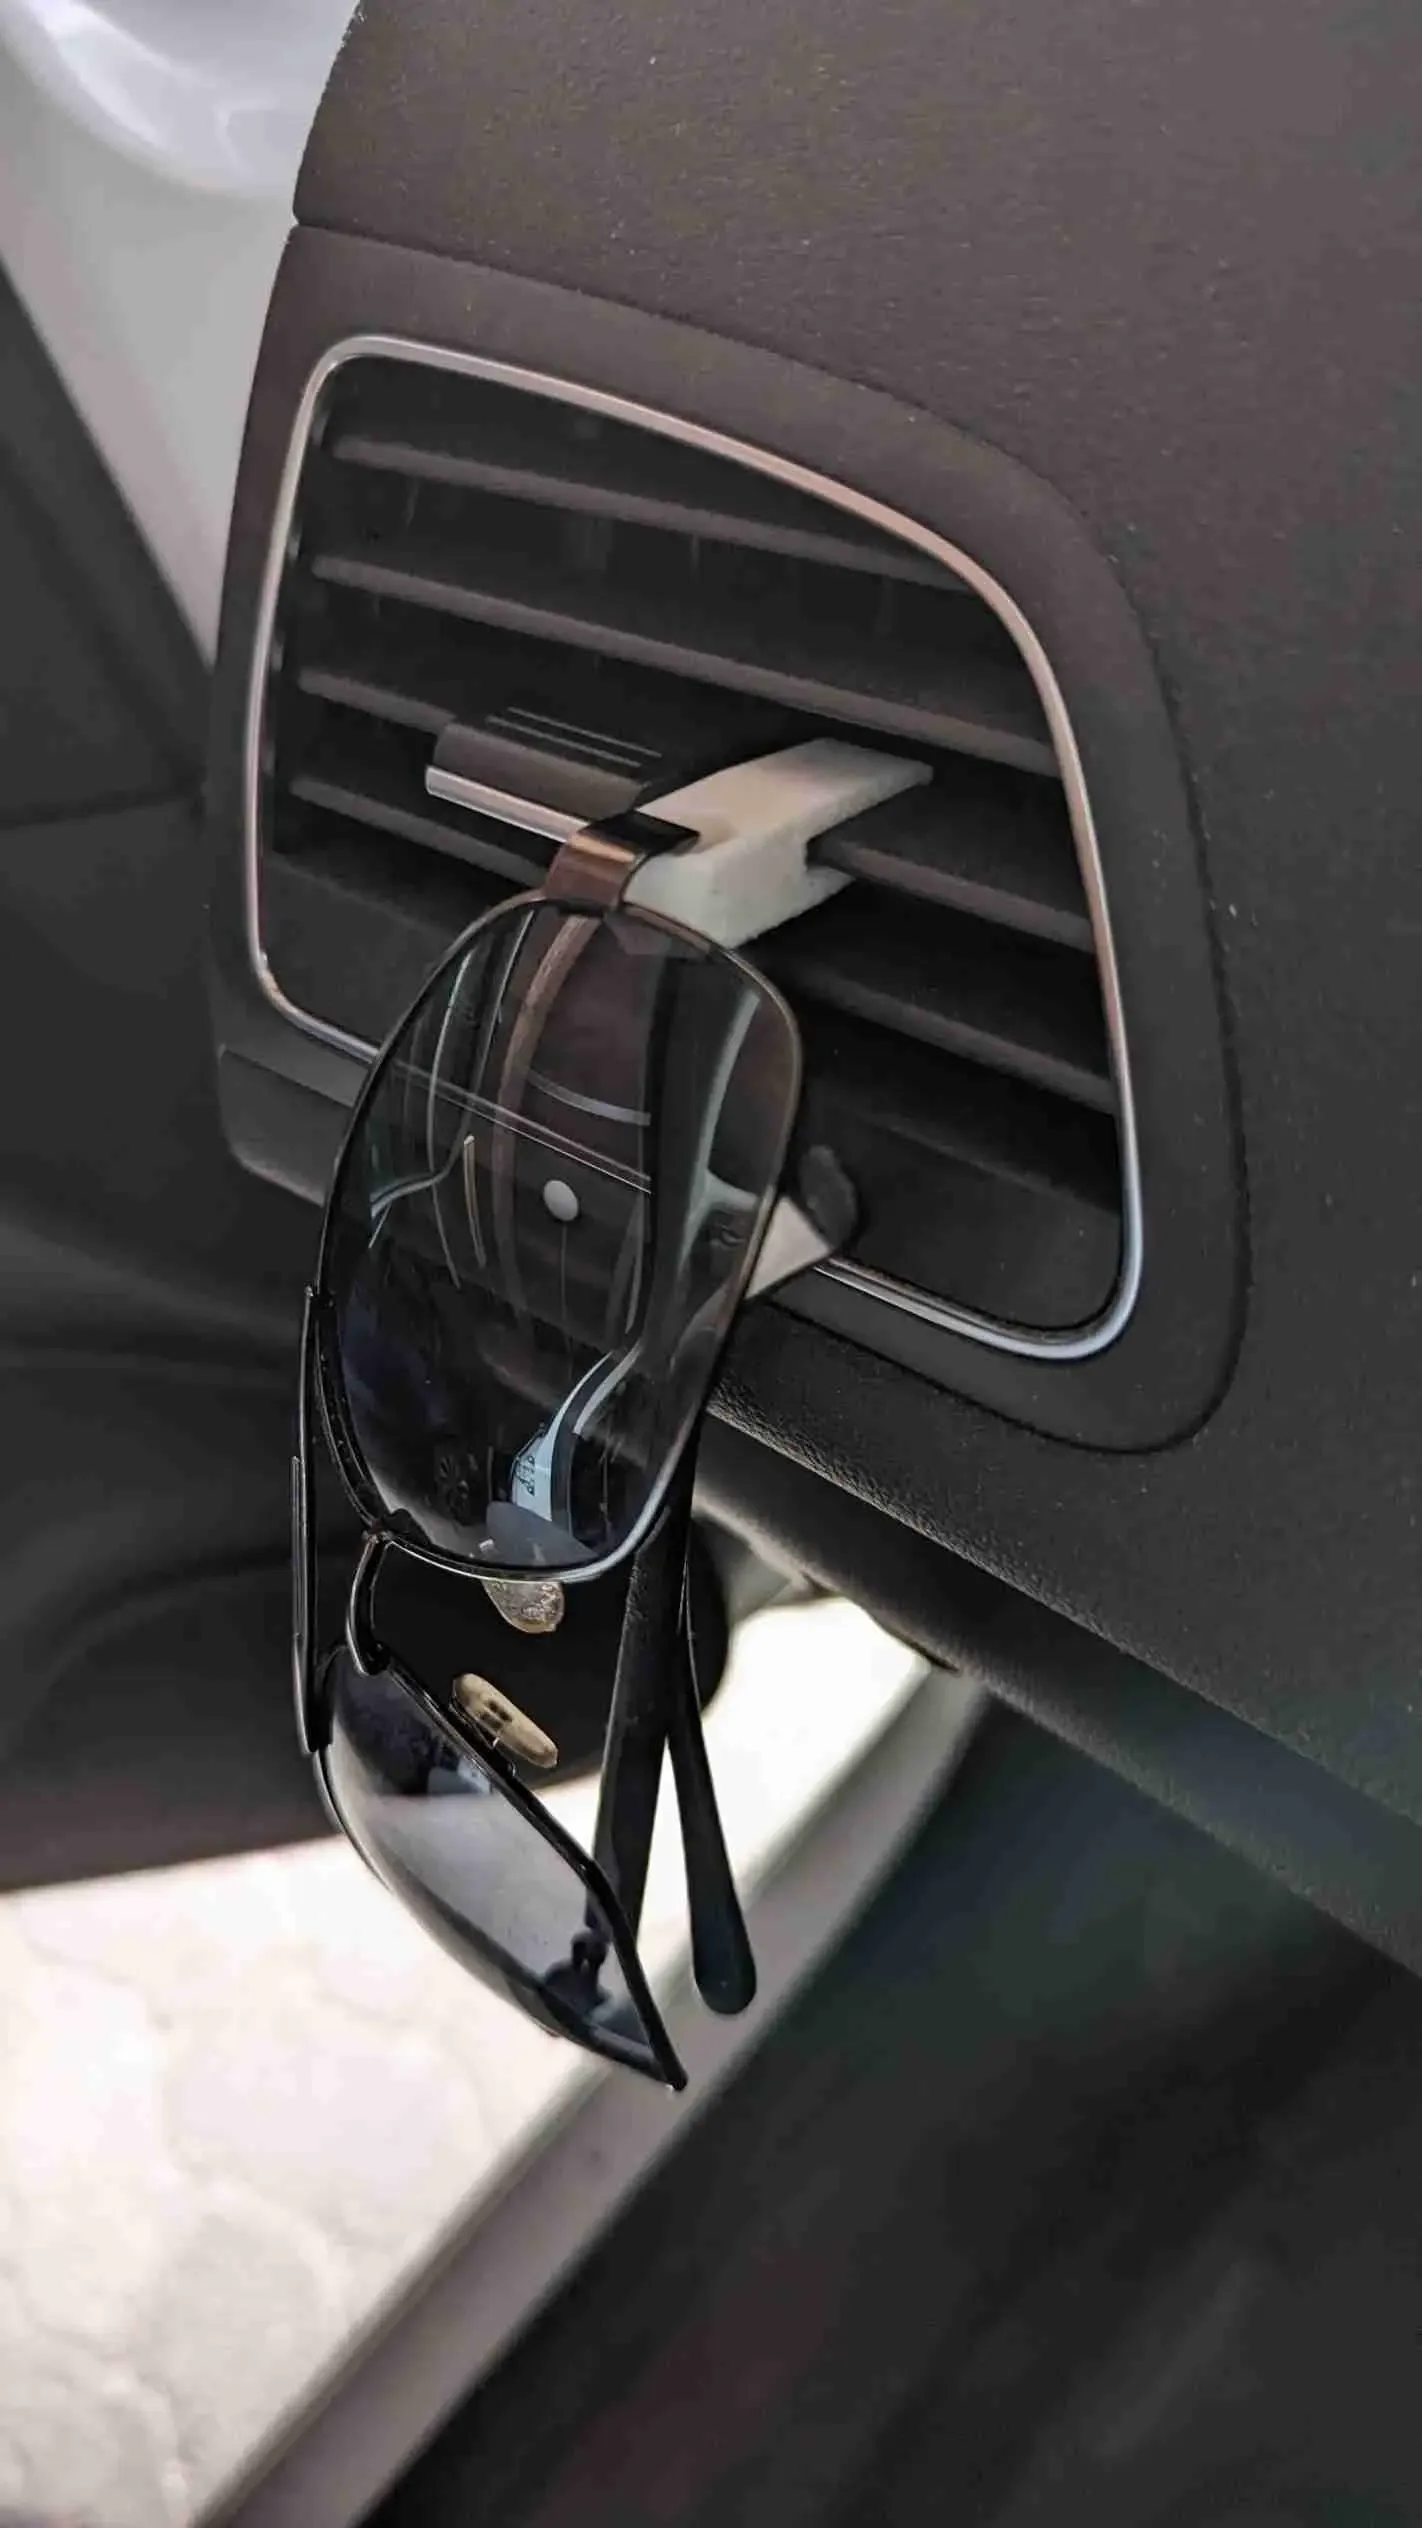 Sunglass holder (car ventilation mounted)